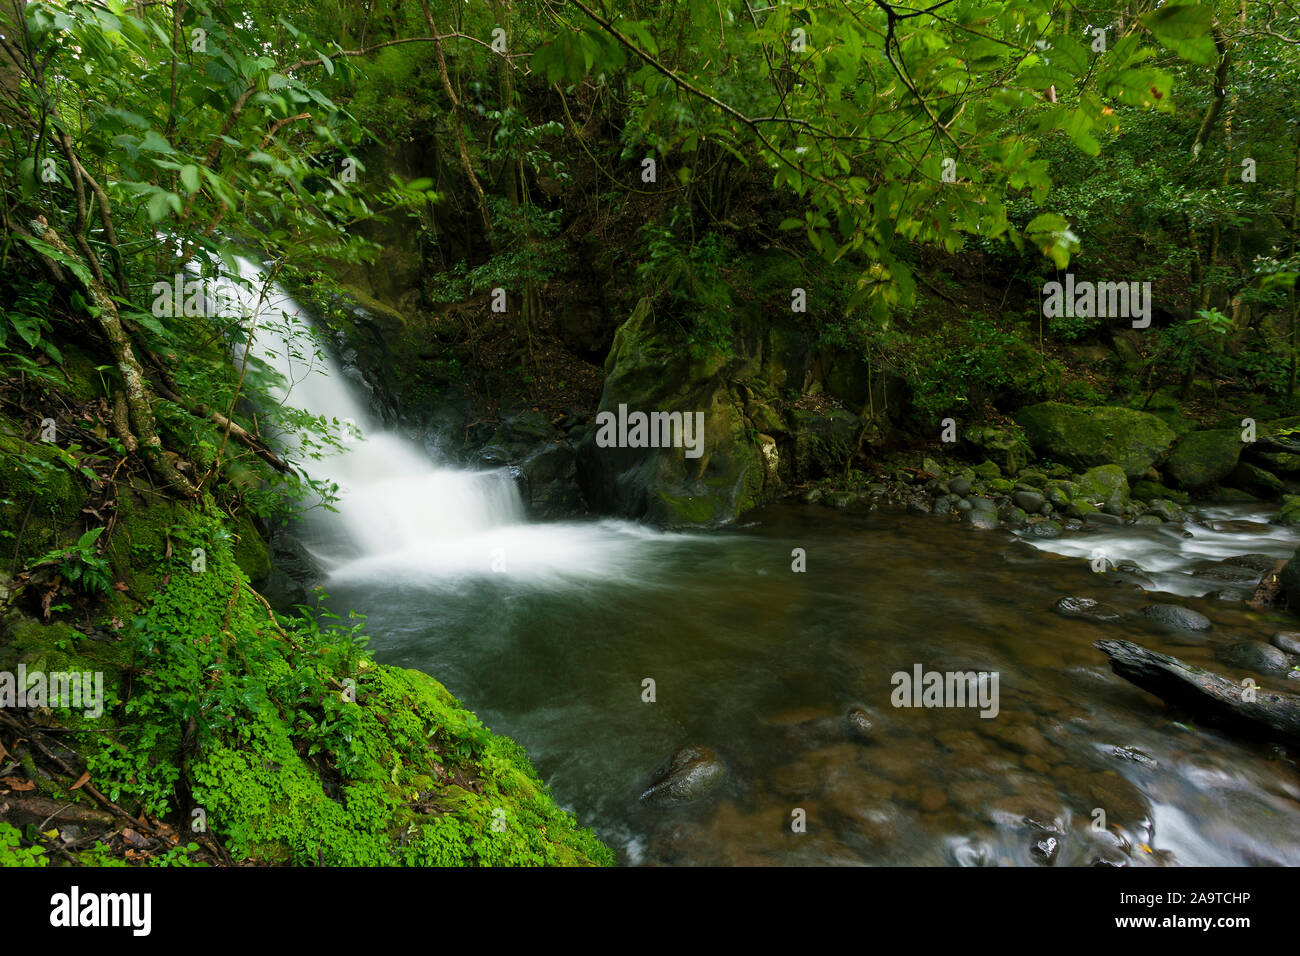 Morpho cascade, Rincon de la vieja national park, Guanacaste, Costa Rica Stock Photo